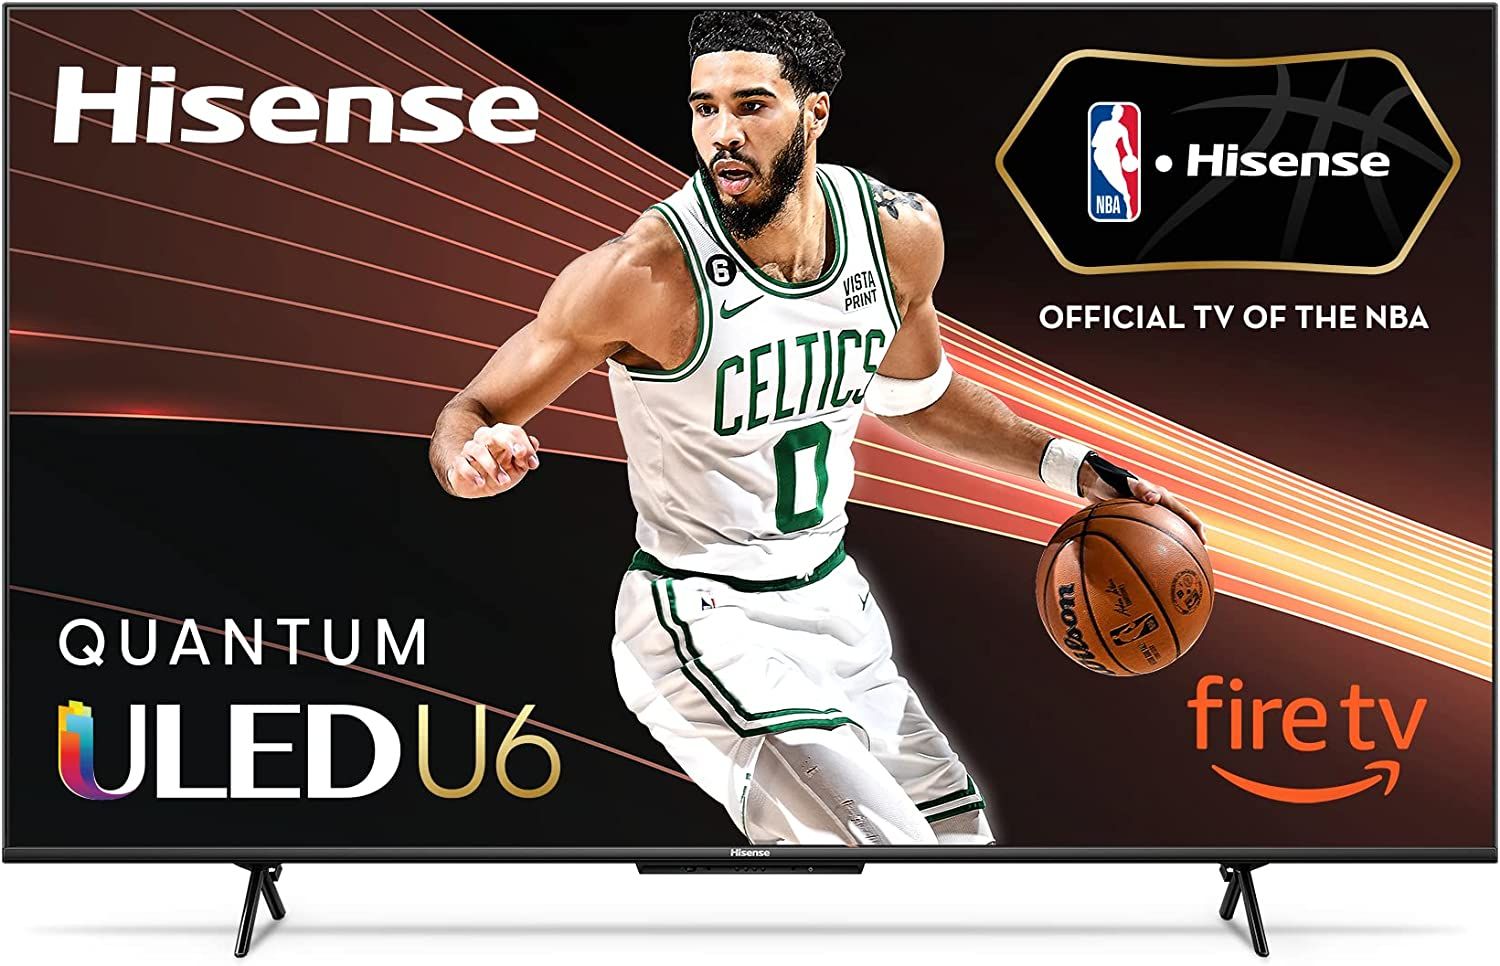 Hisense ULED U6 Series Quantum Dot LED 4K UHD Smart Fire TV PBI